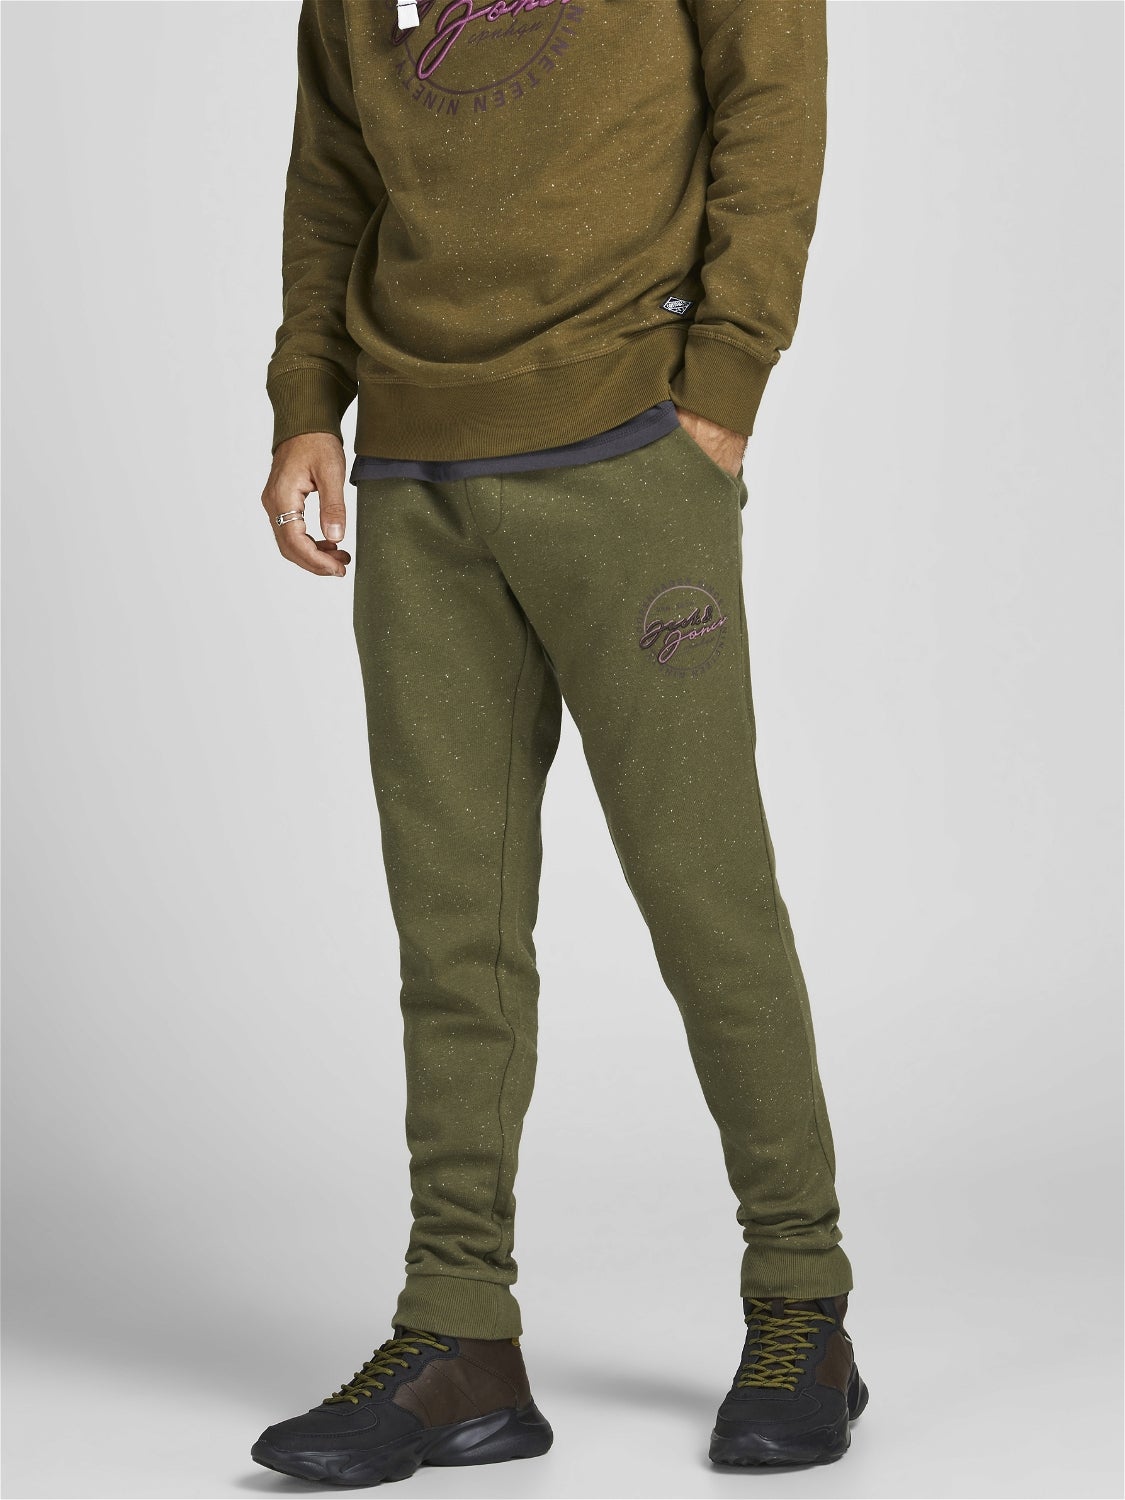 Green XL Jack & Jones tracksuit and joggers MEN FASHION Trousers Strech discount 55% 